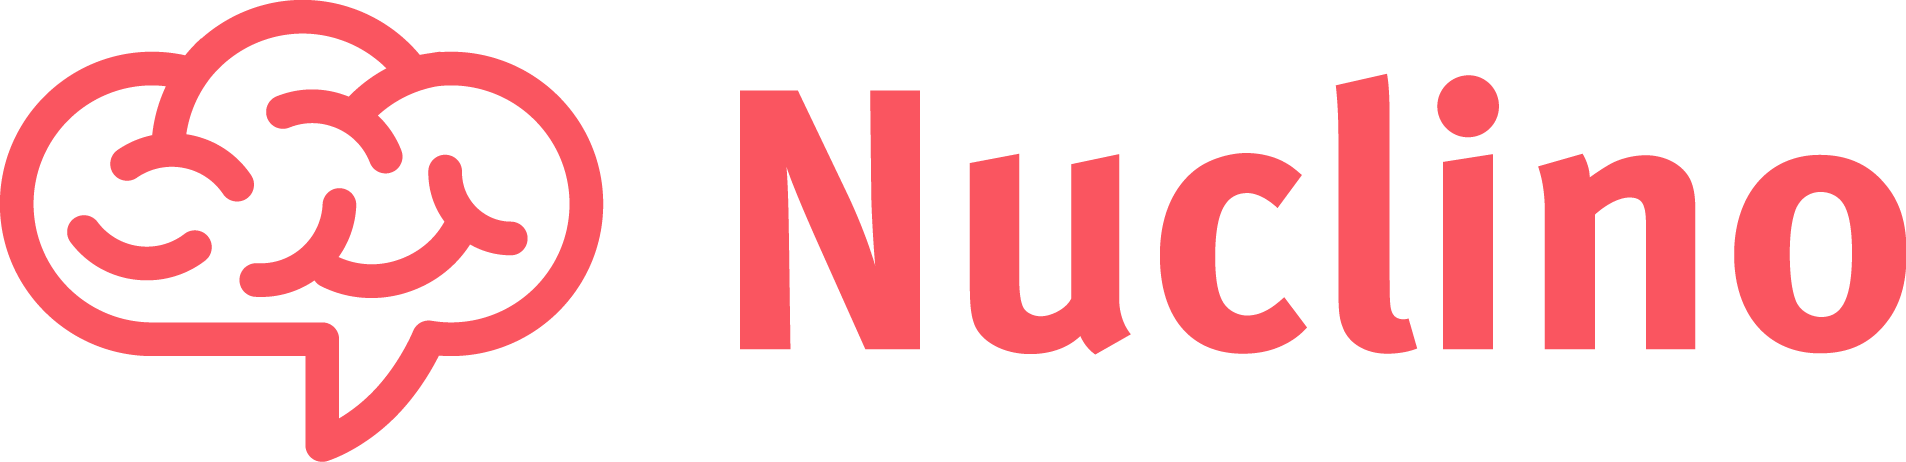 Nuclino Integration